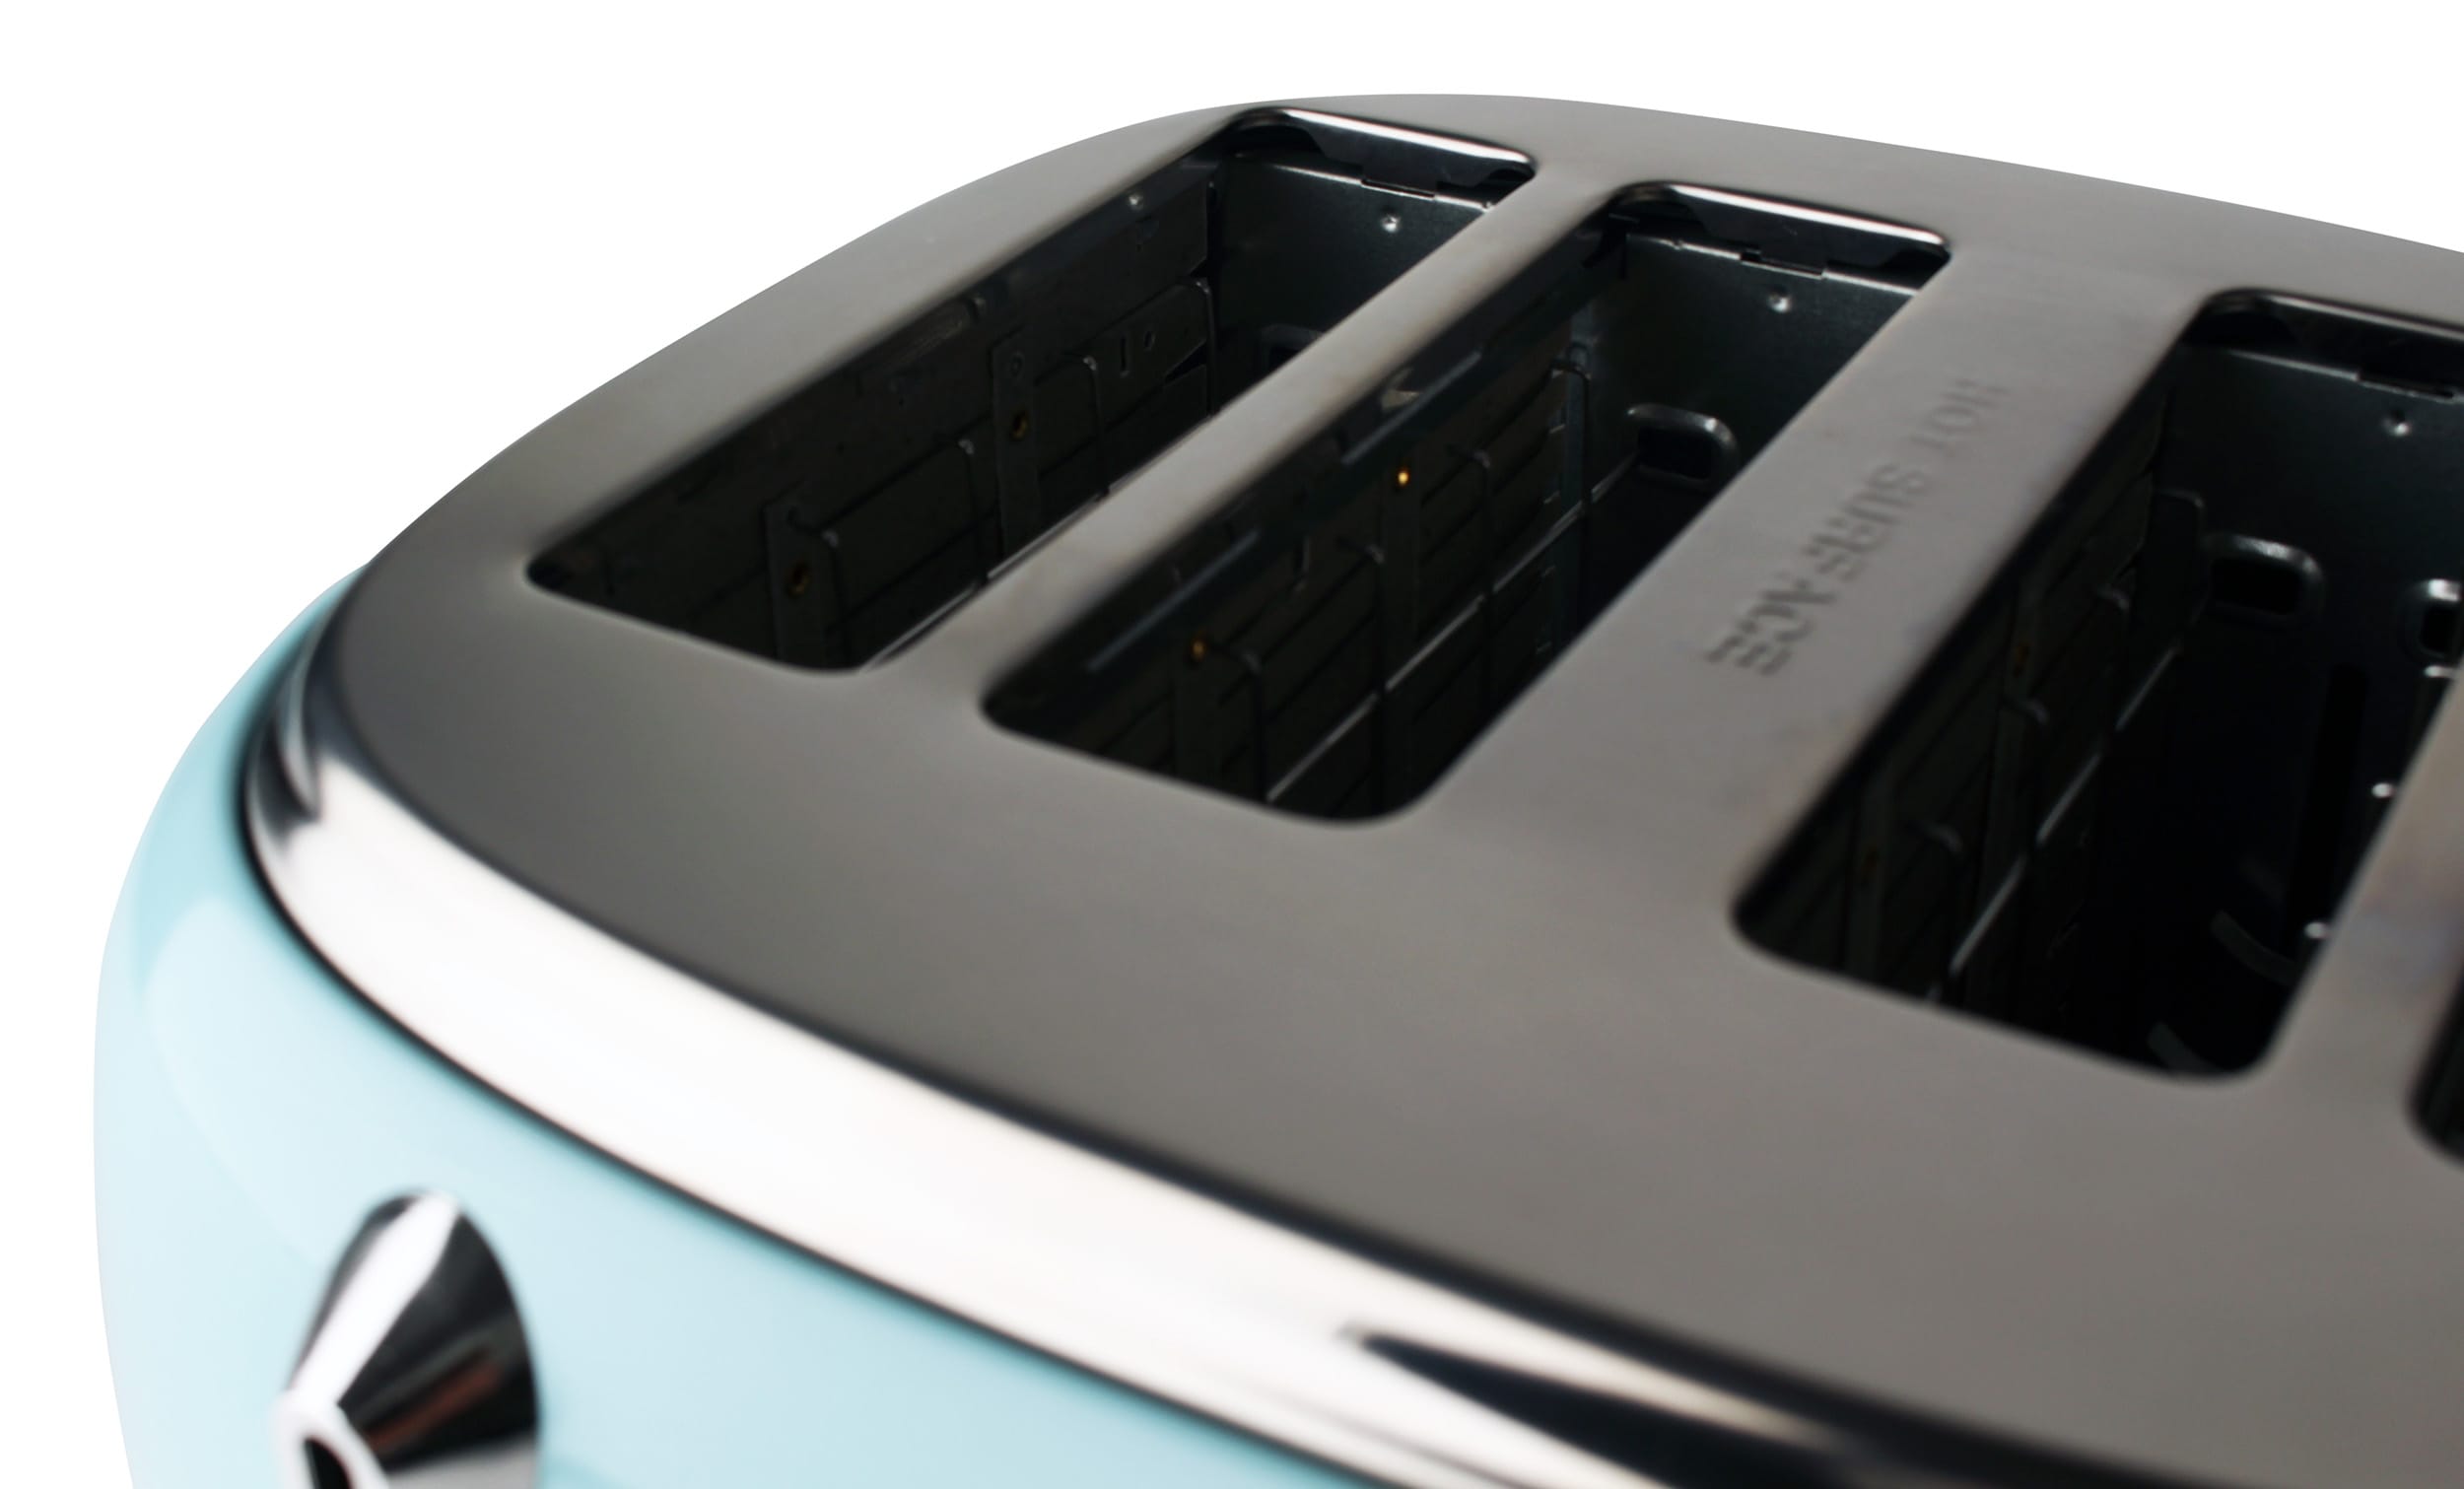 Haden Poole Blue Highclere 4 Slice Wide Slot Toaster - World Market